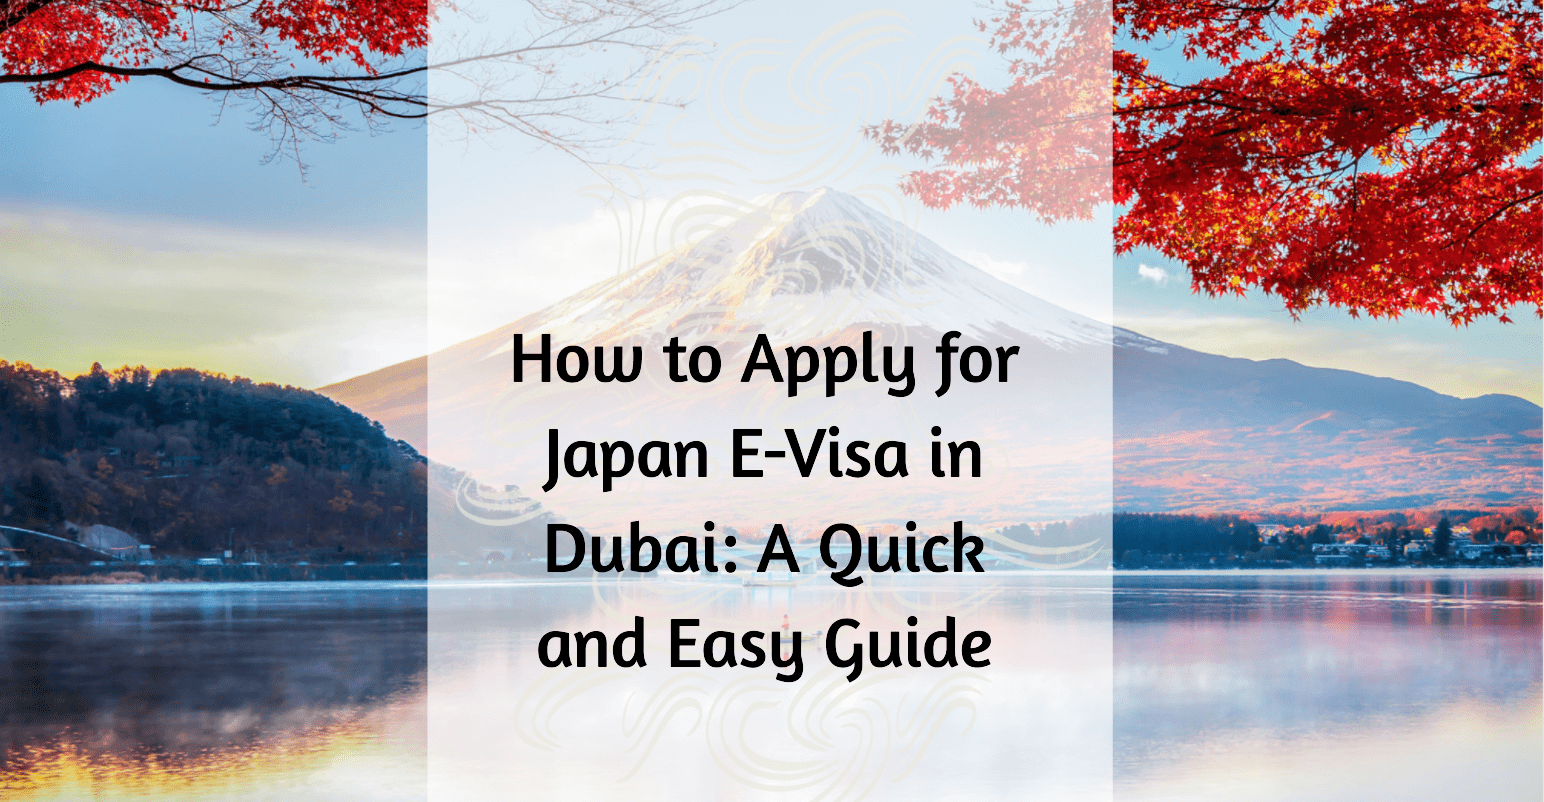 Japan visa for UAE residents